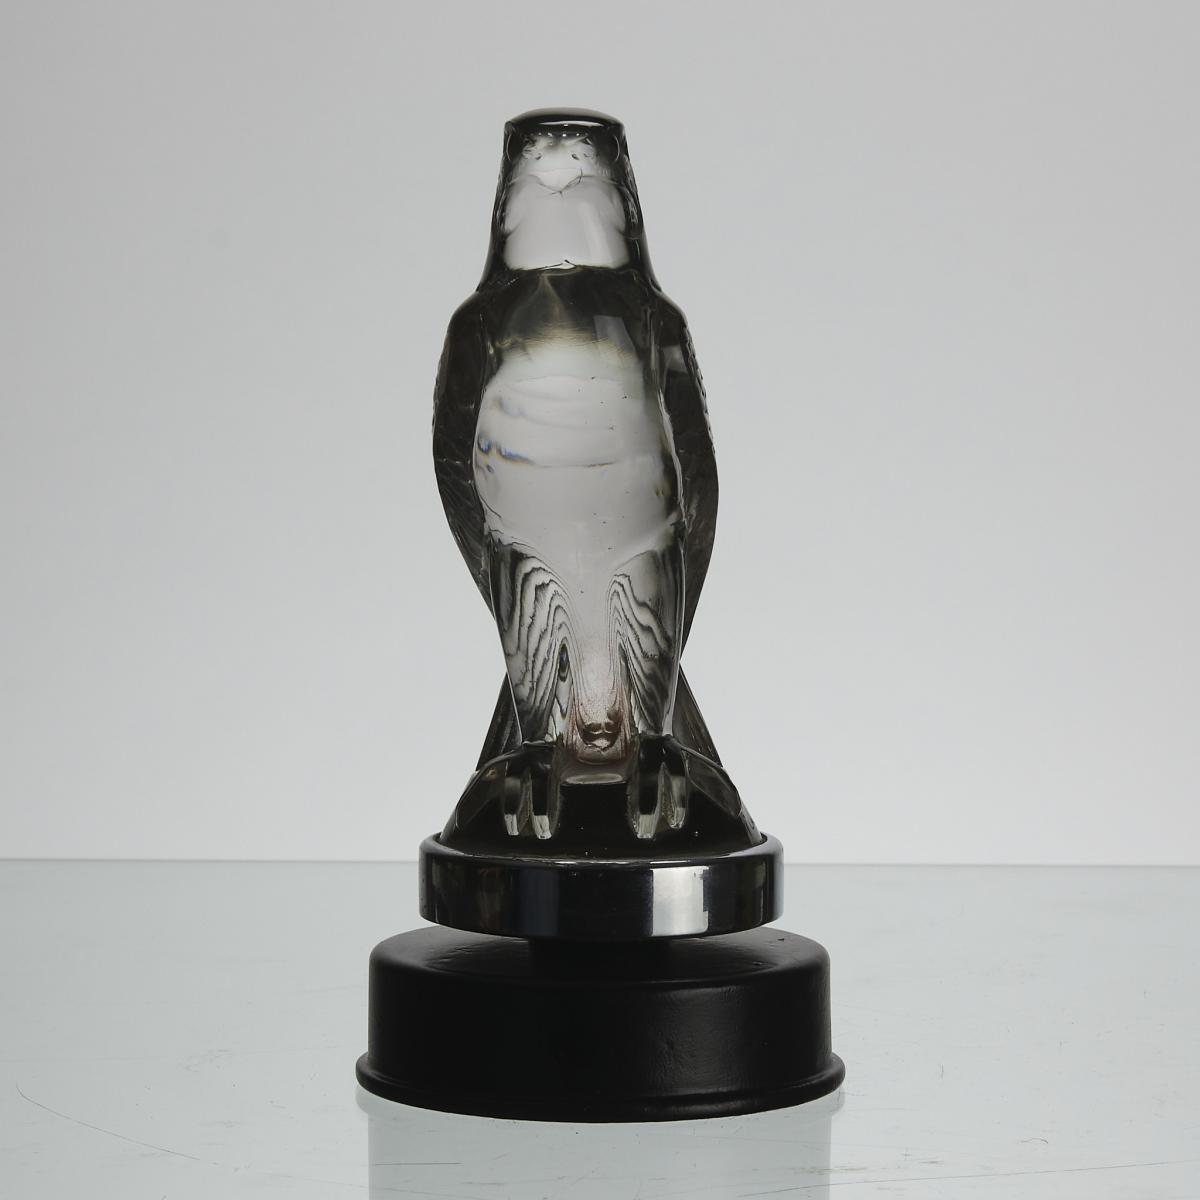 Early 20th Century Art Deco Glass Mascot entitled "Faucon" by René Lalique